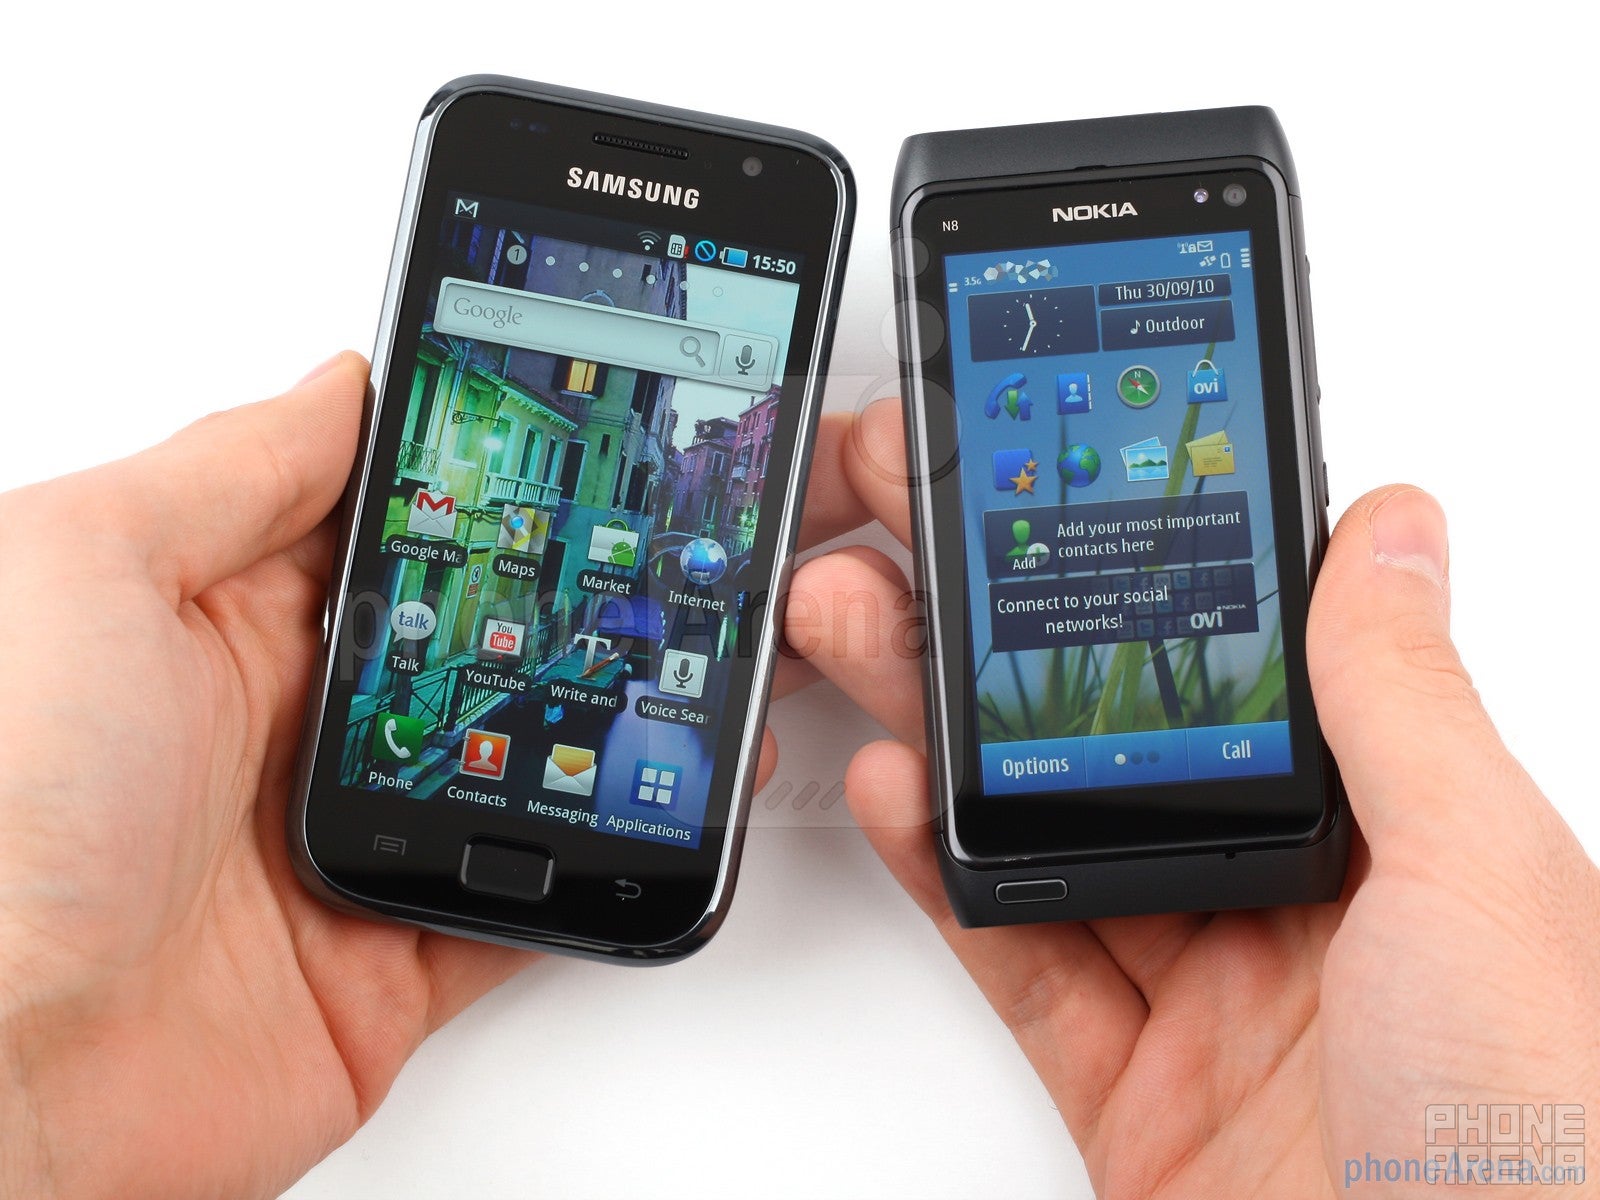 Nokia N8 vs Samsung Galaxy S